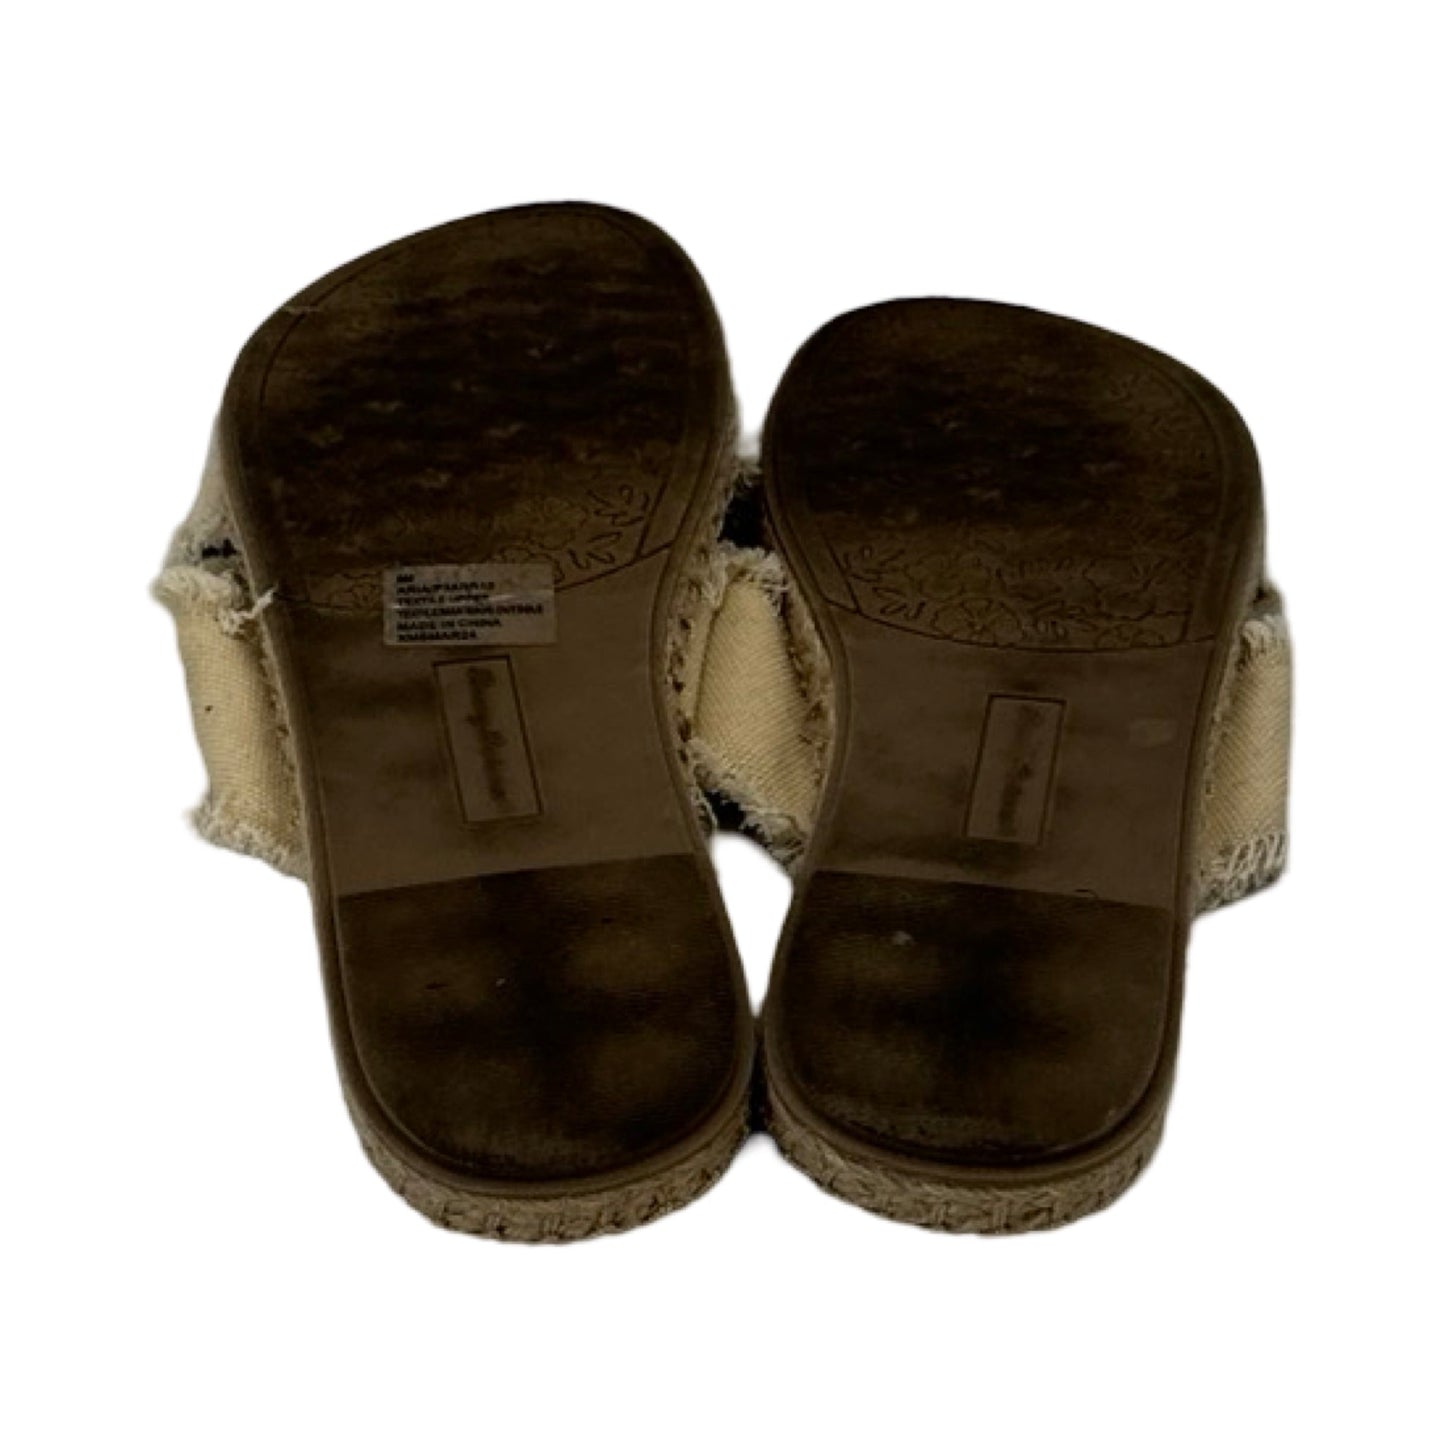 Cream Sandals Flip Flops Tommy Bahama, Size 8